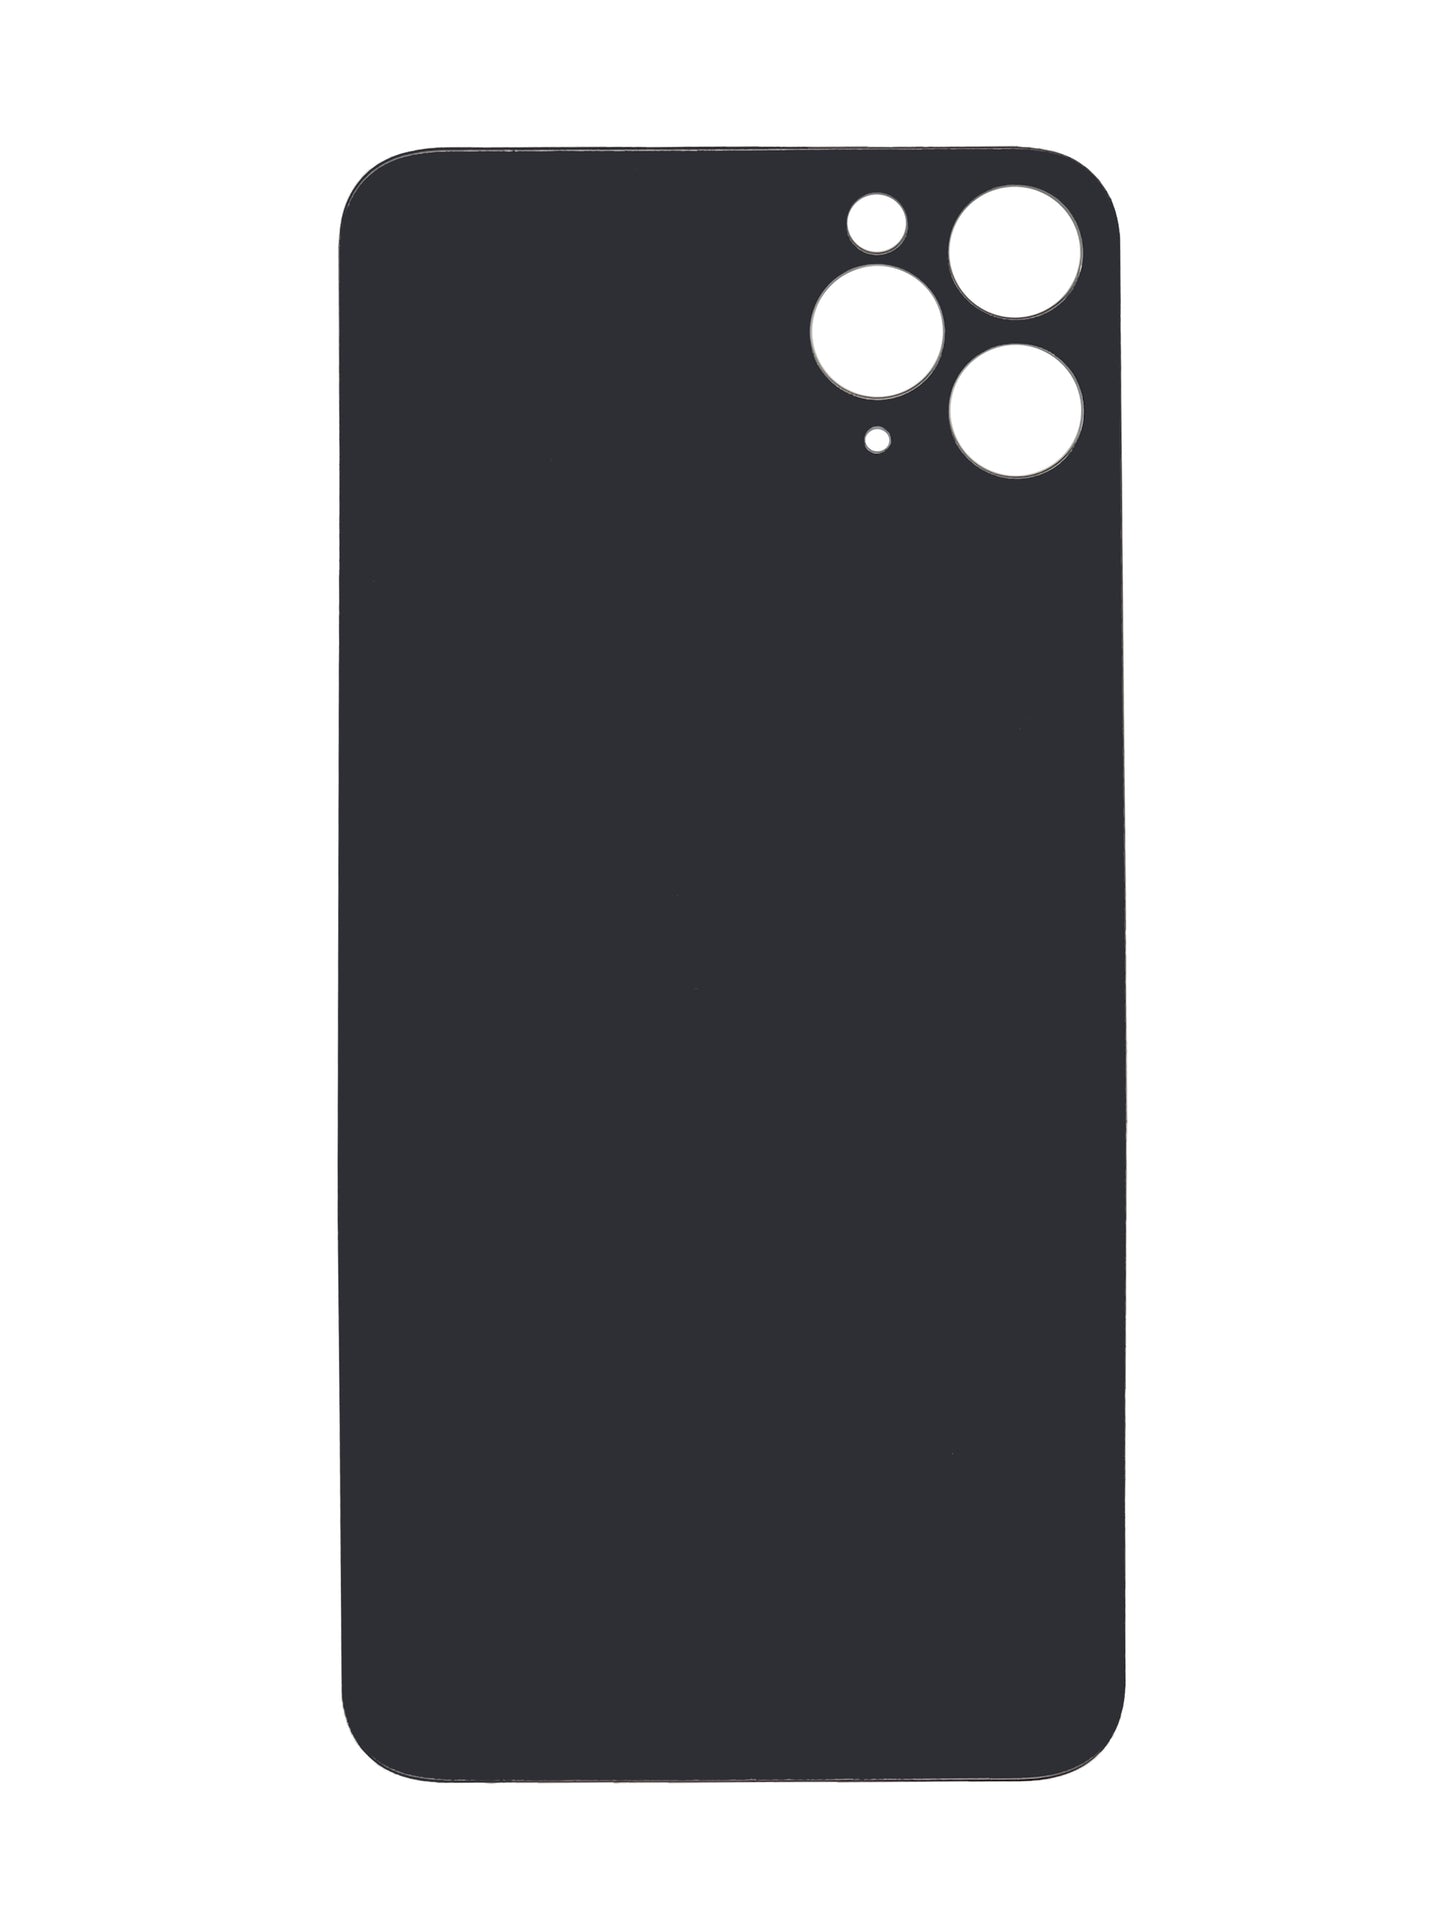 iPhone 11 Pro Max Back Glass (No Logo) (Black)